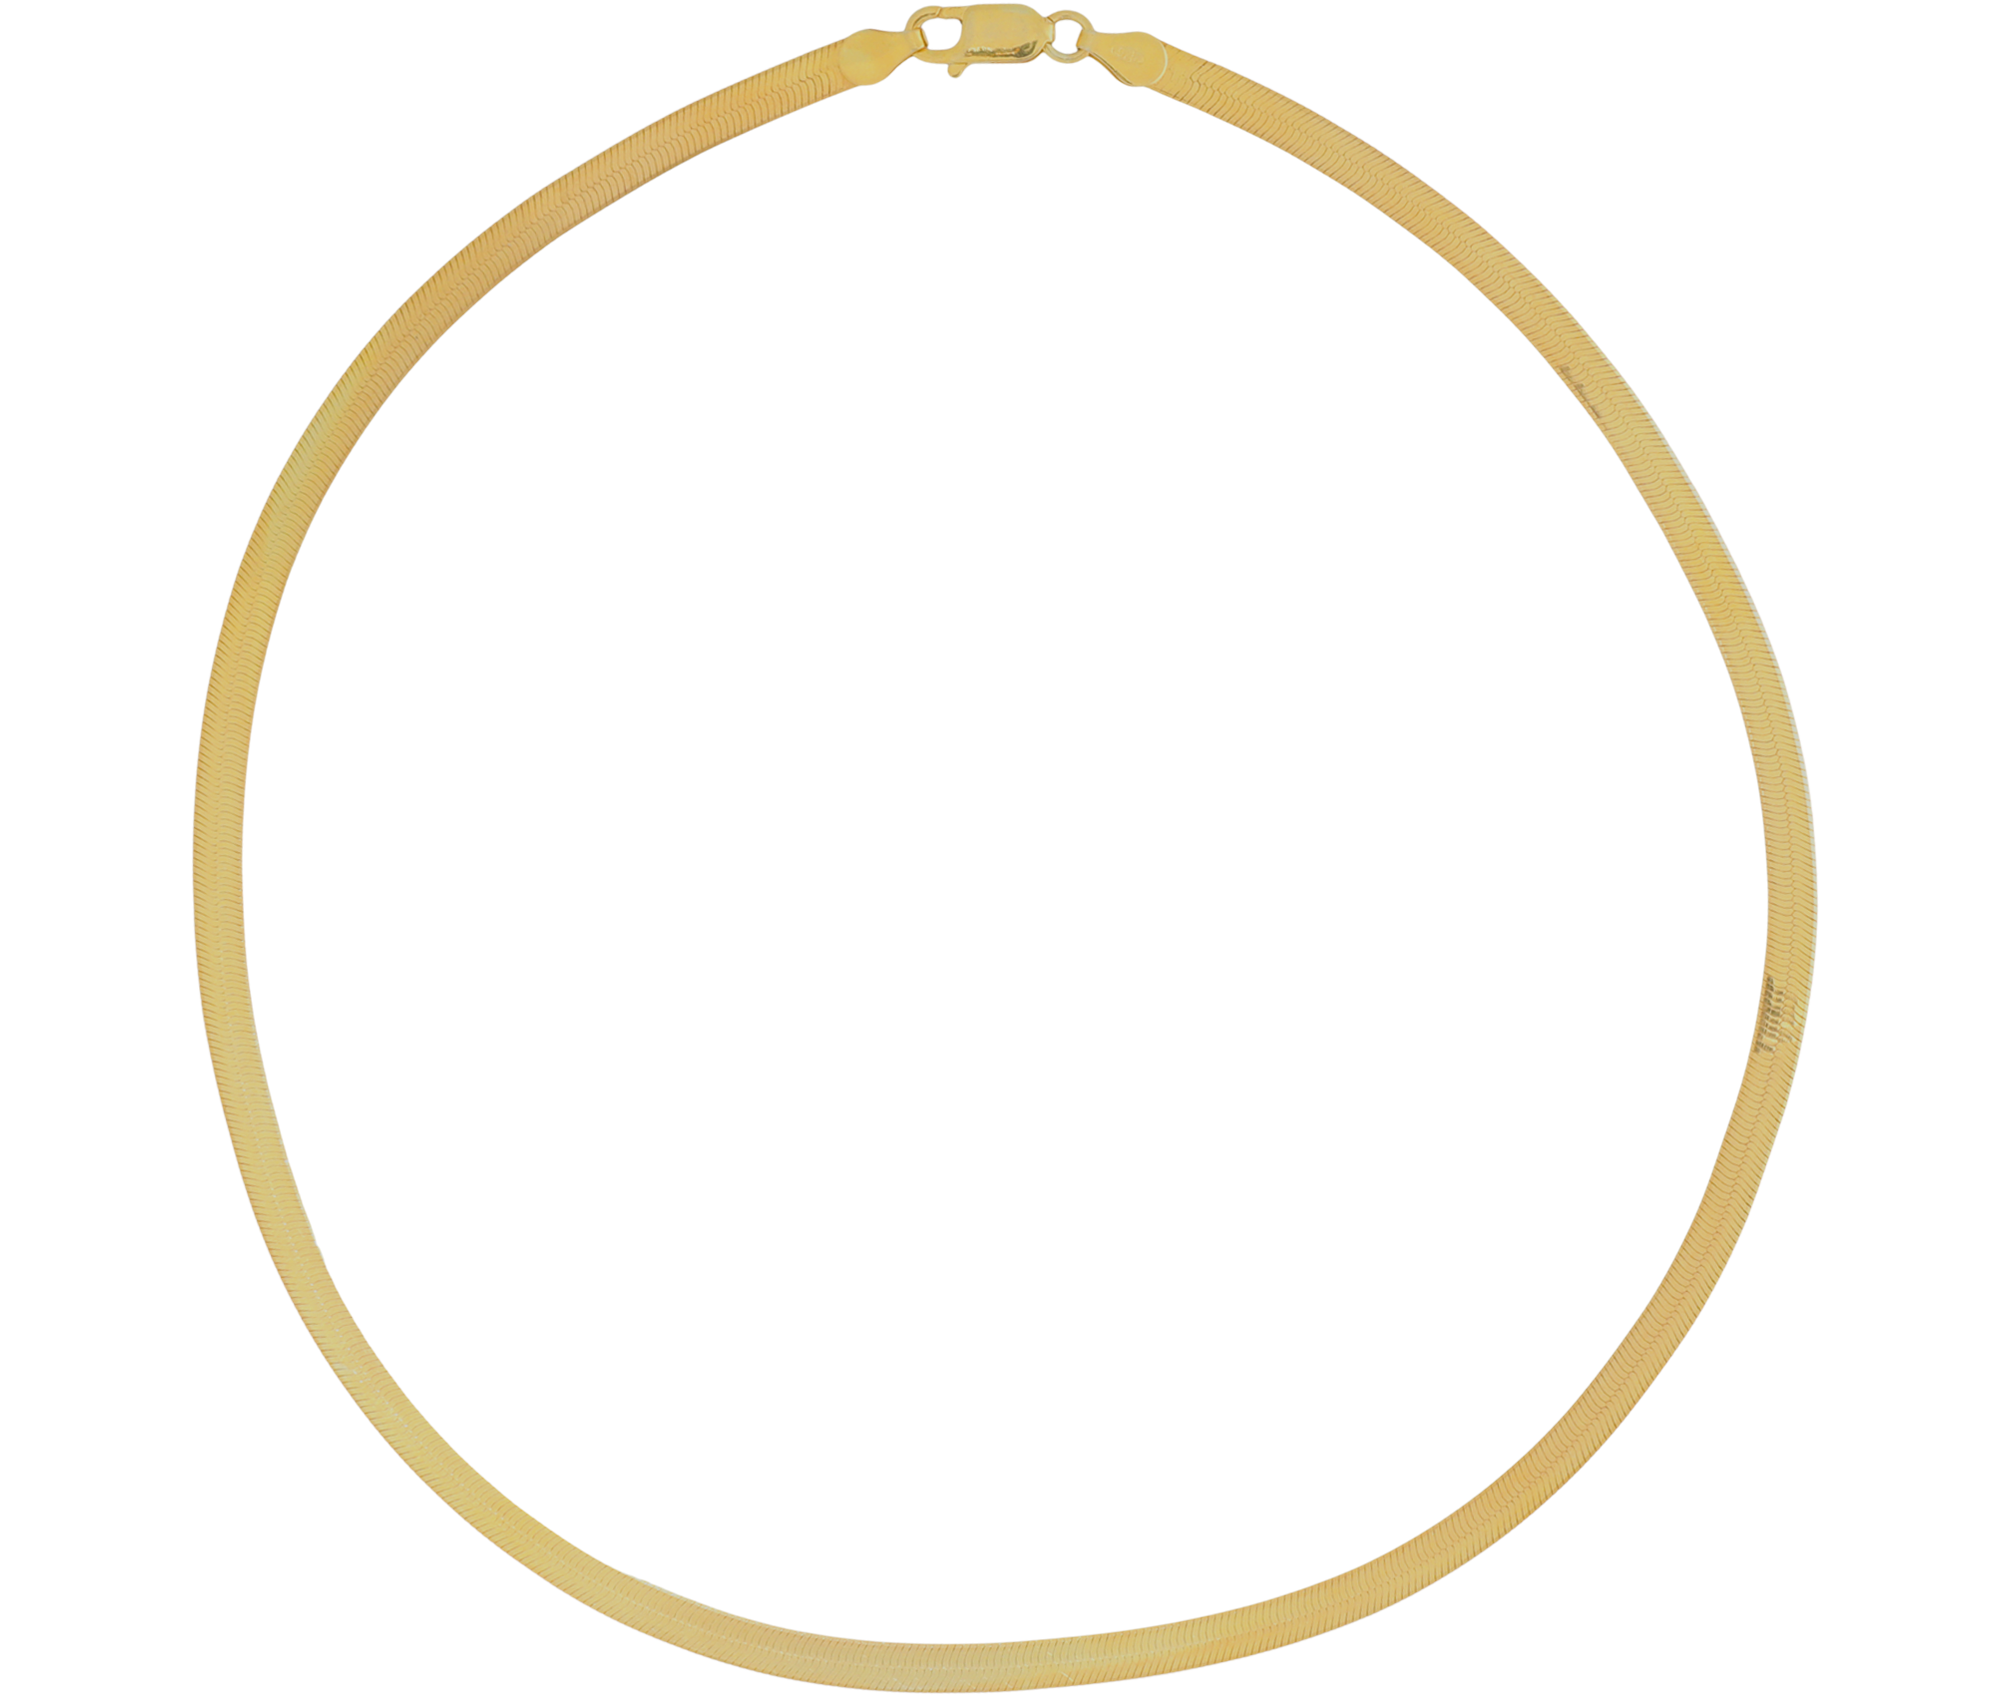 Flat Chain Necklace - Keentu